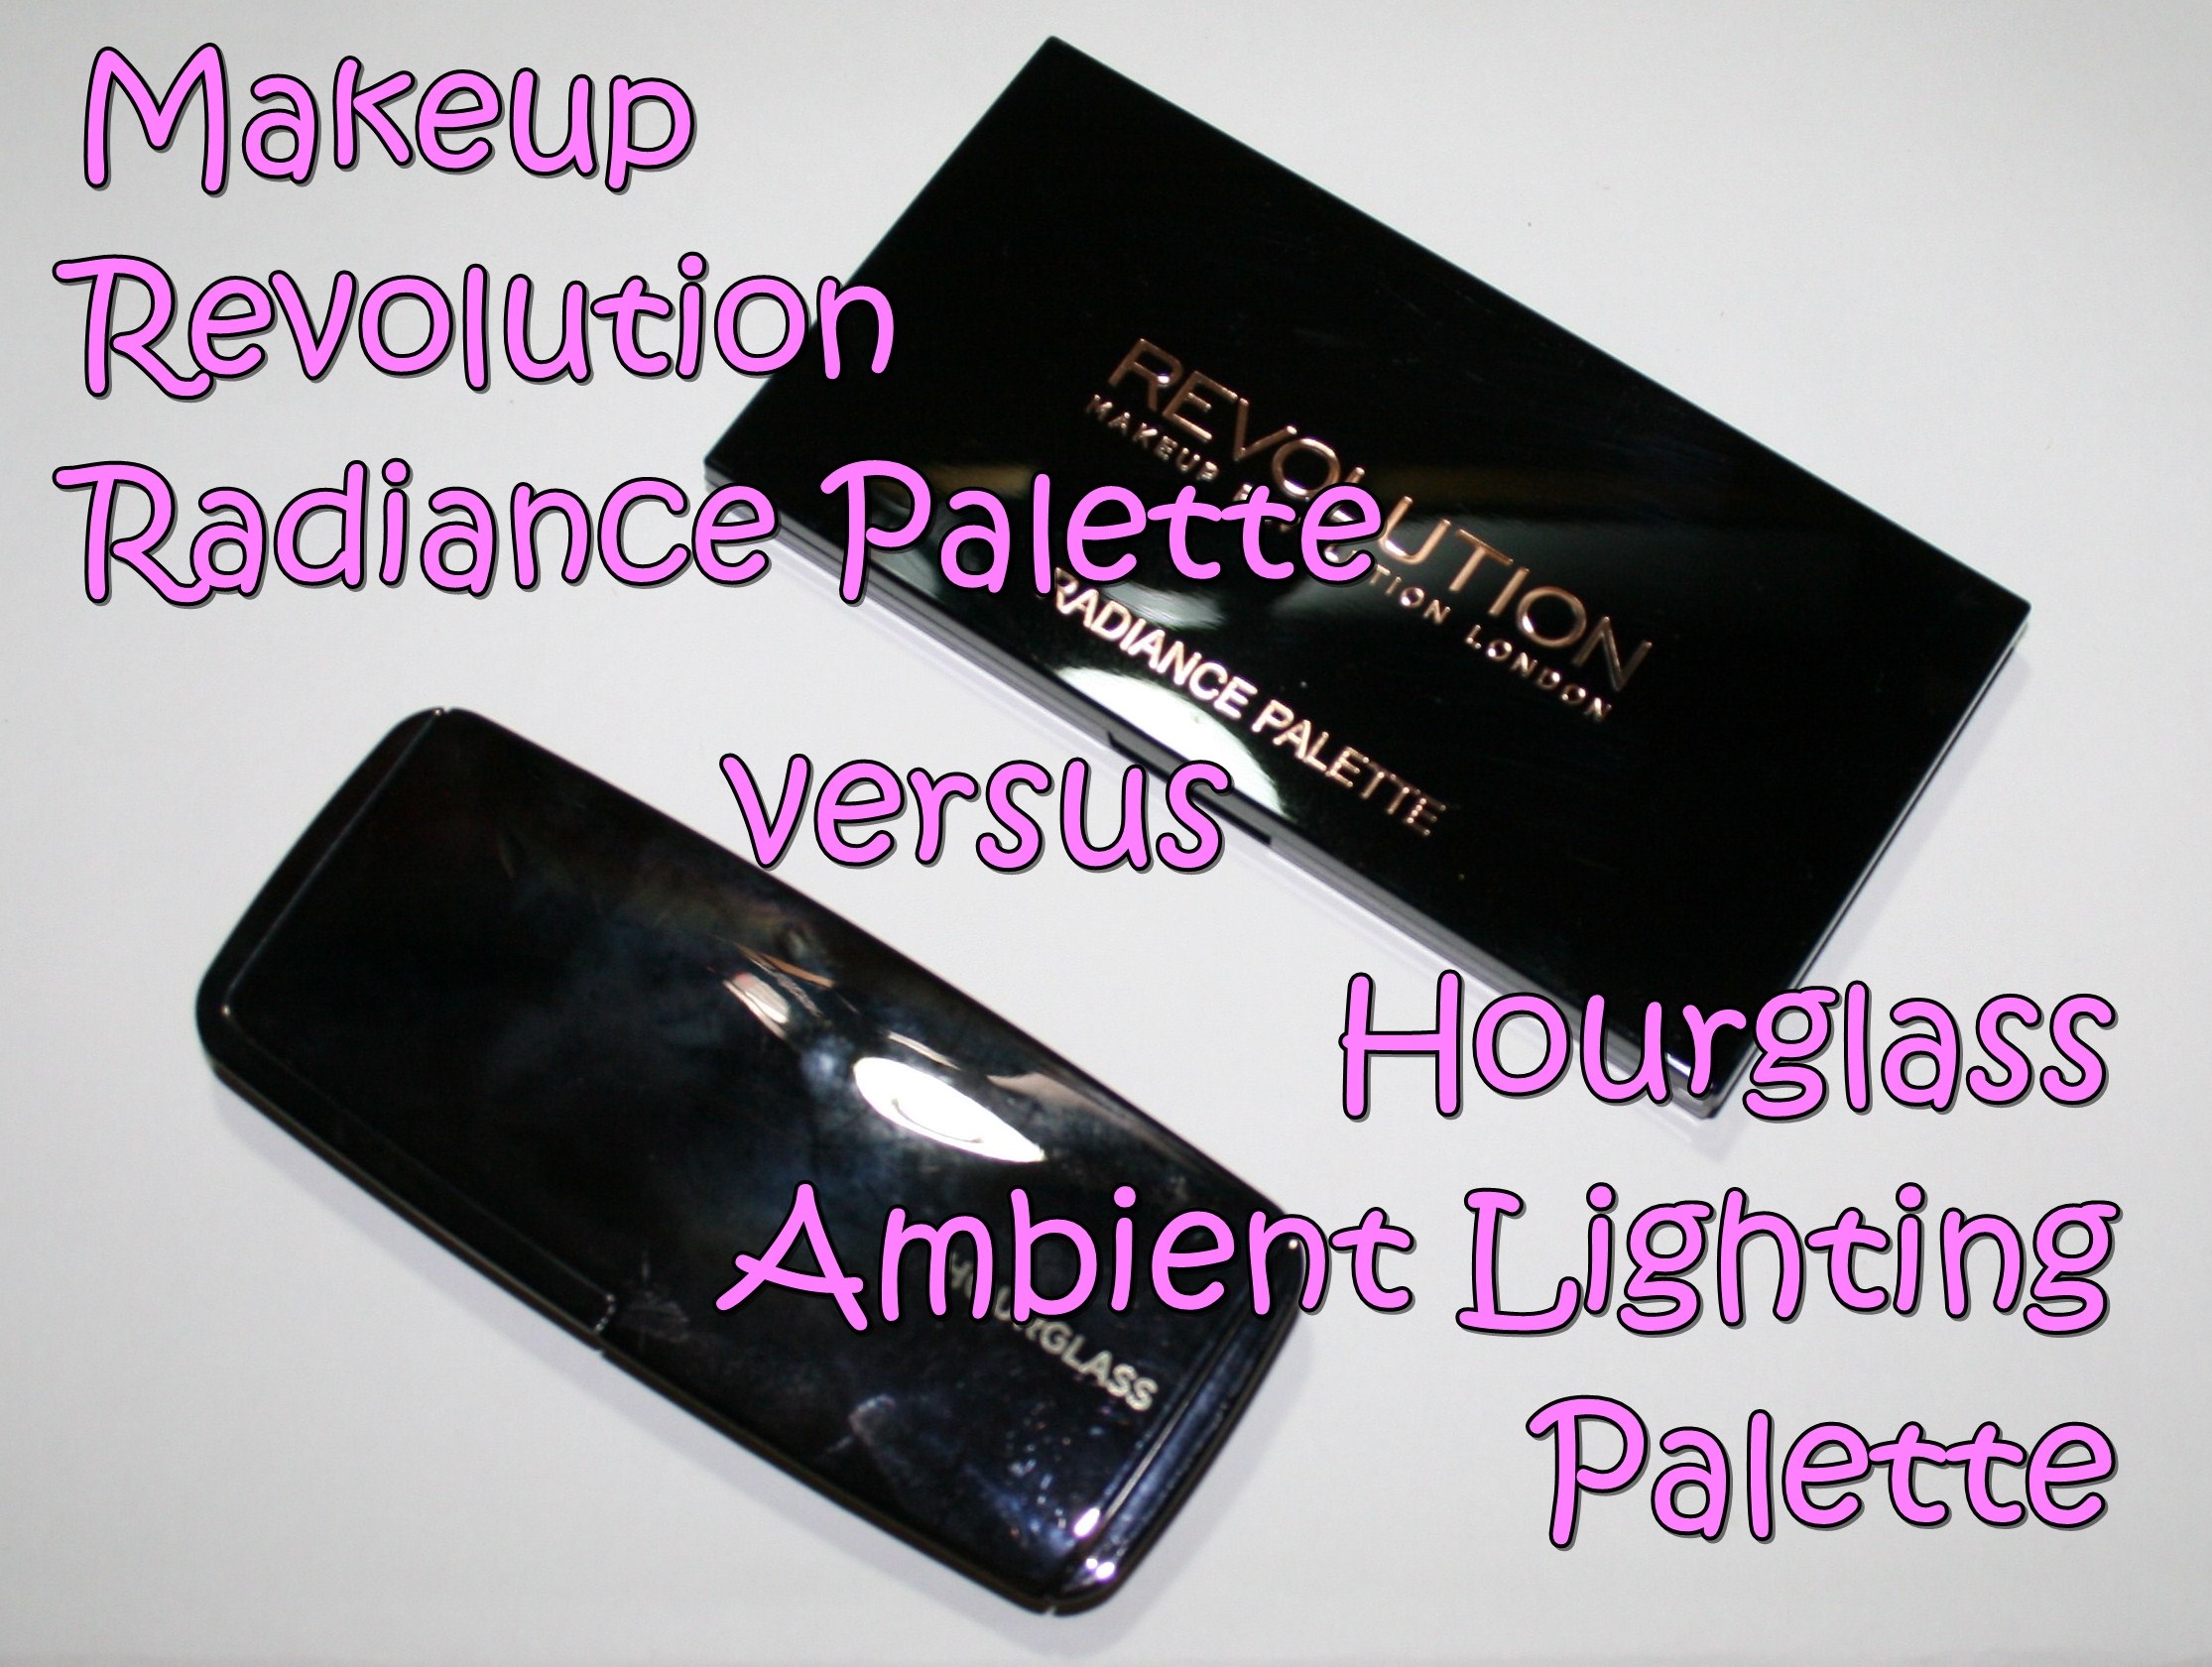 Hourglass Ambient Lighting vs Makeup Revolution Radiance Palette